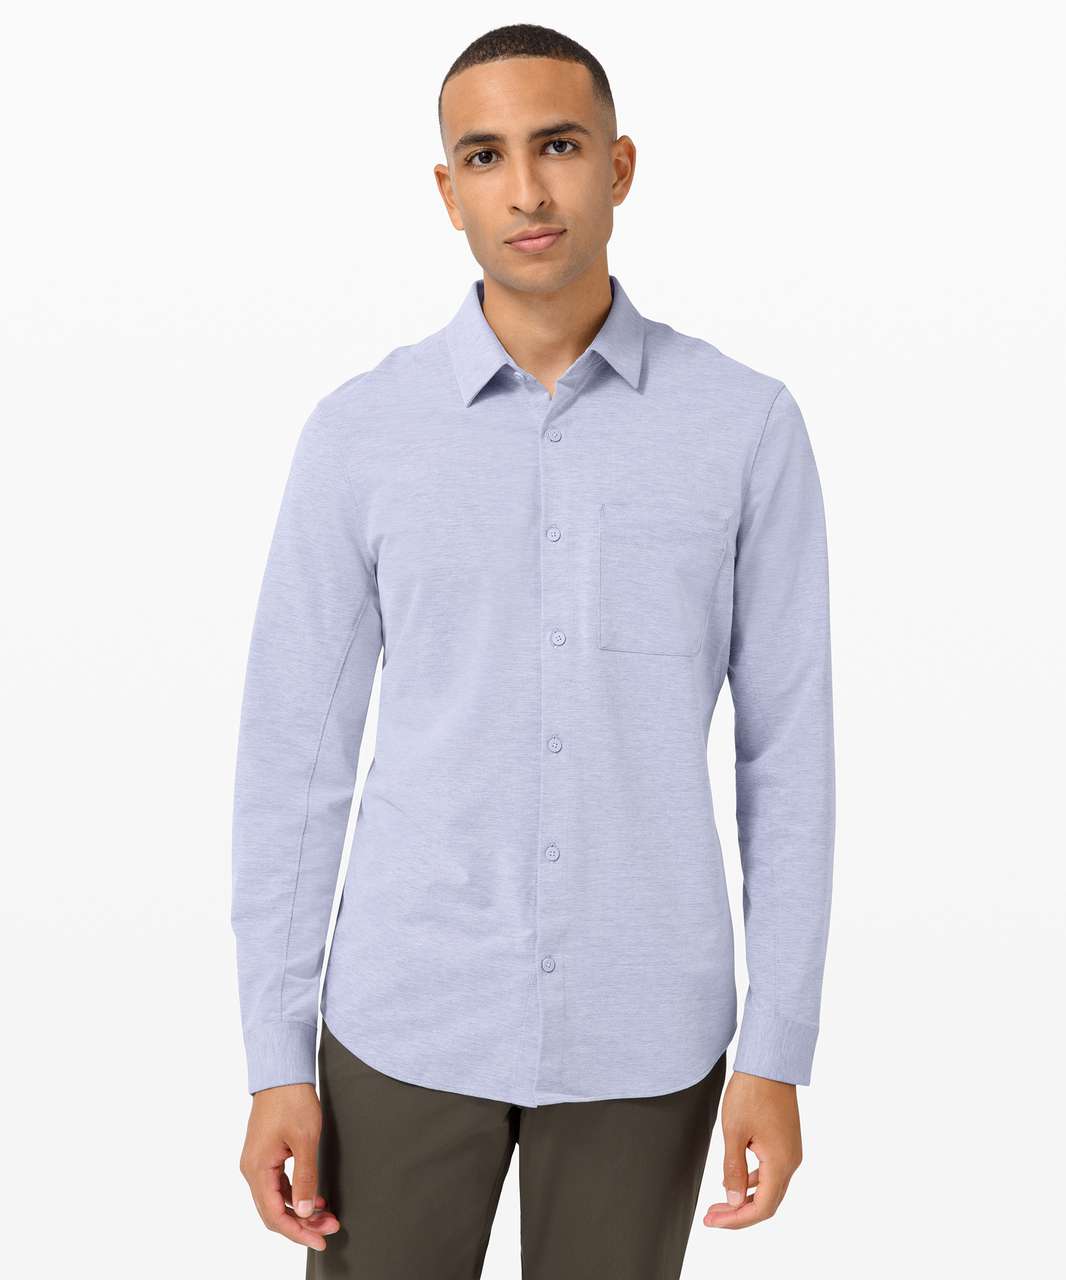 Lululemon Commission Long Sleeve Shirt - Harbor Blue / White (First Release)